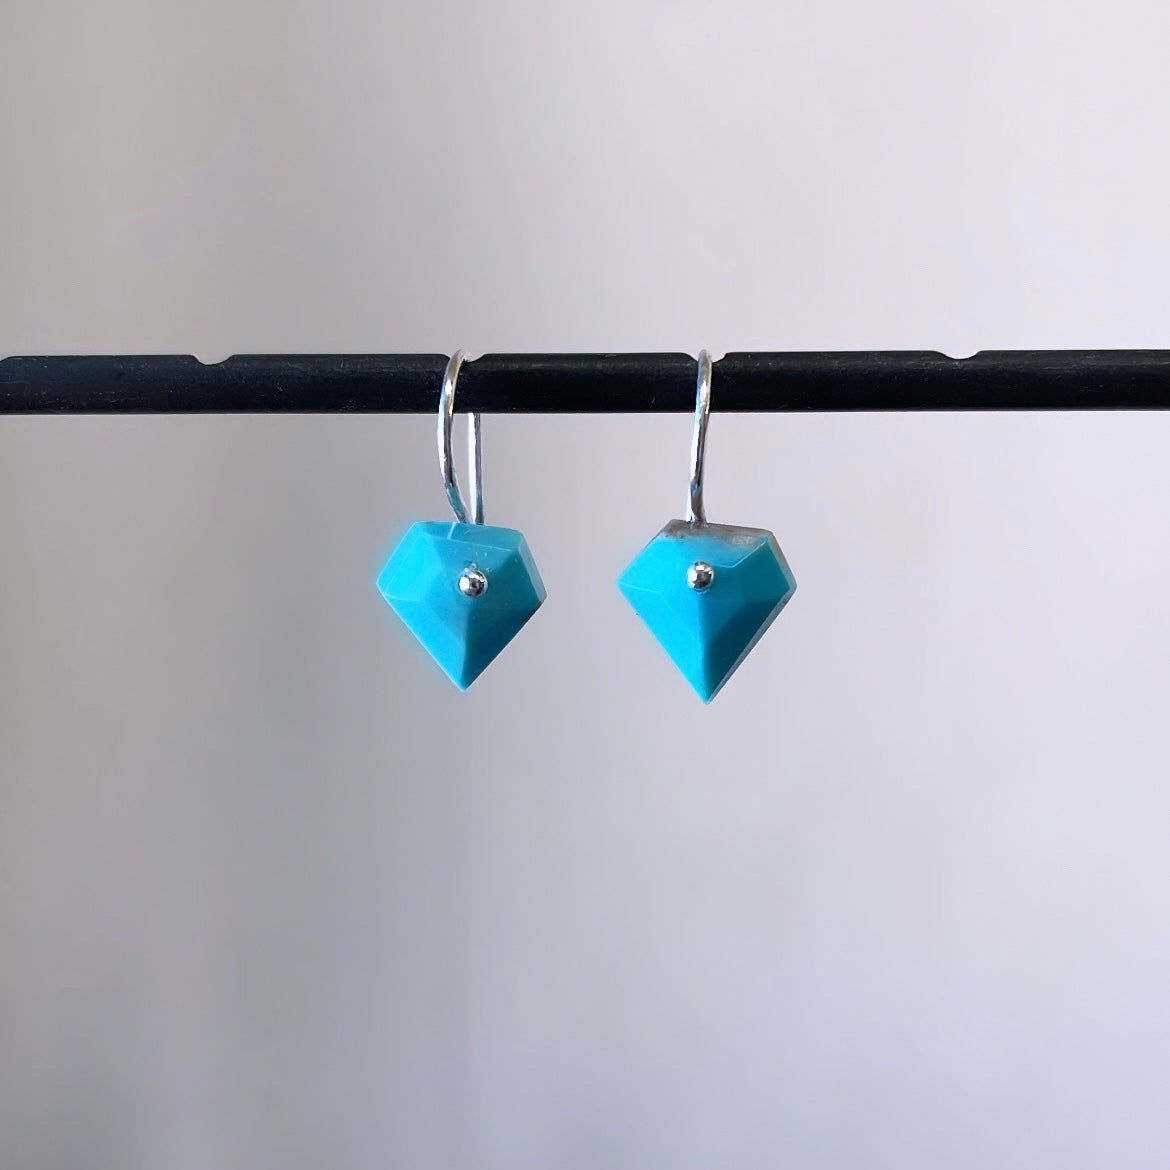 Mini earrings in faceted turquoise-serena kojimoto studio